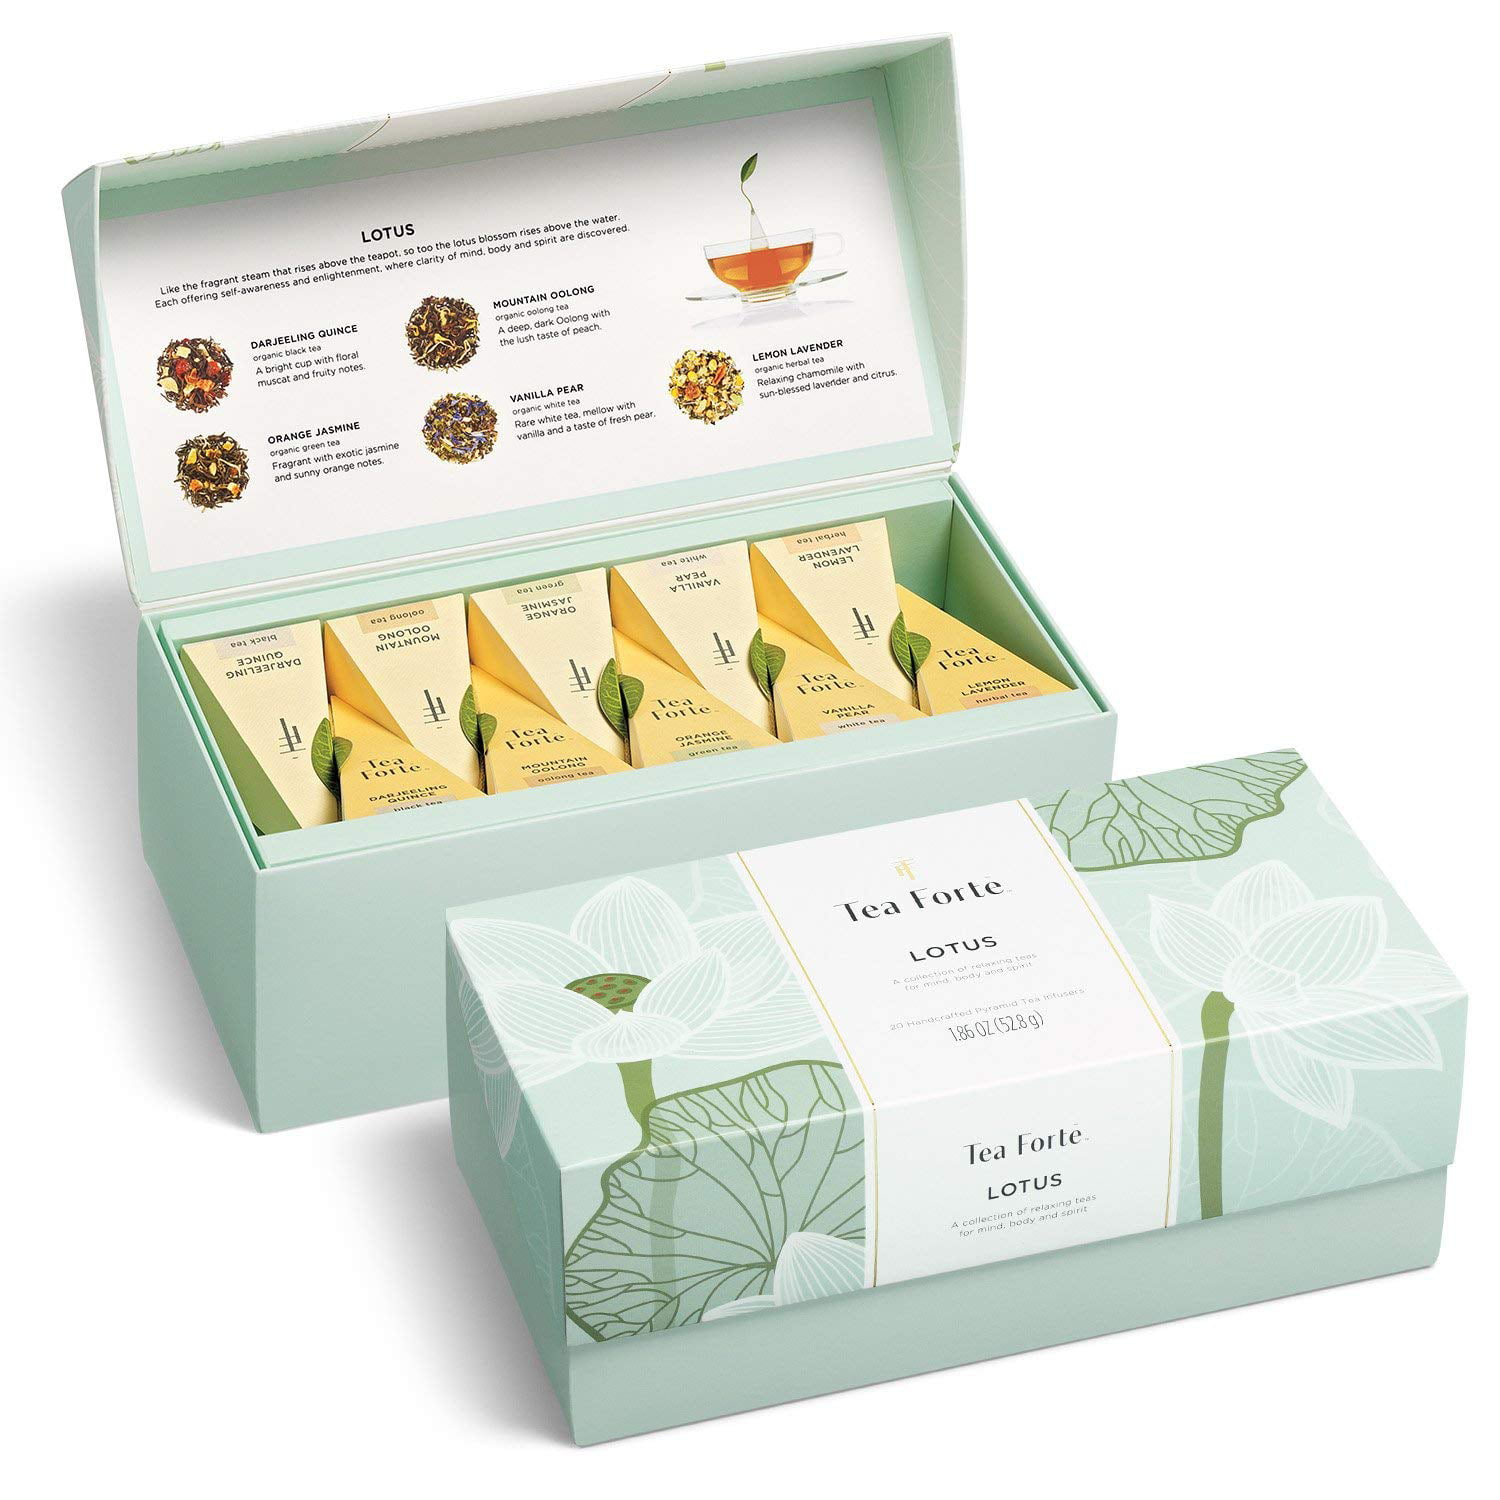 Tea Forte Lotus Relaxing Teas Presentation Box Tea Sampler